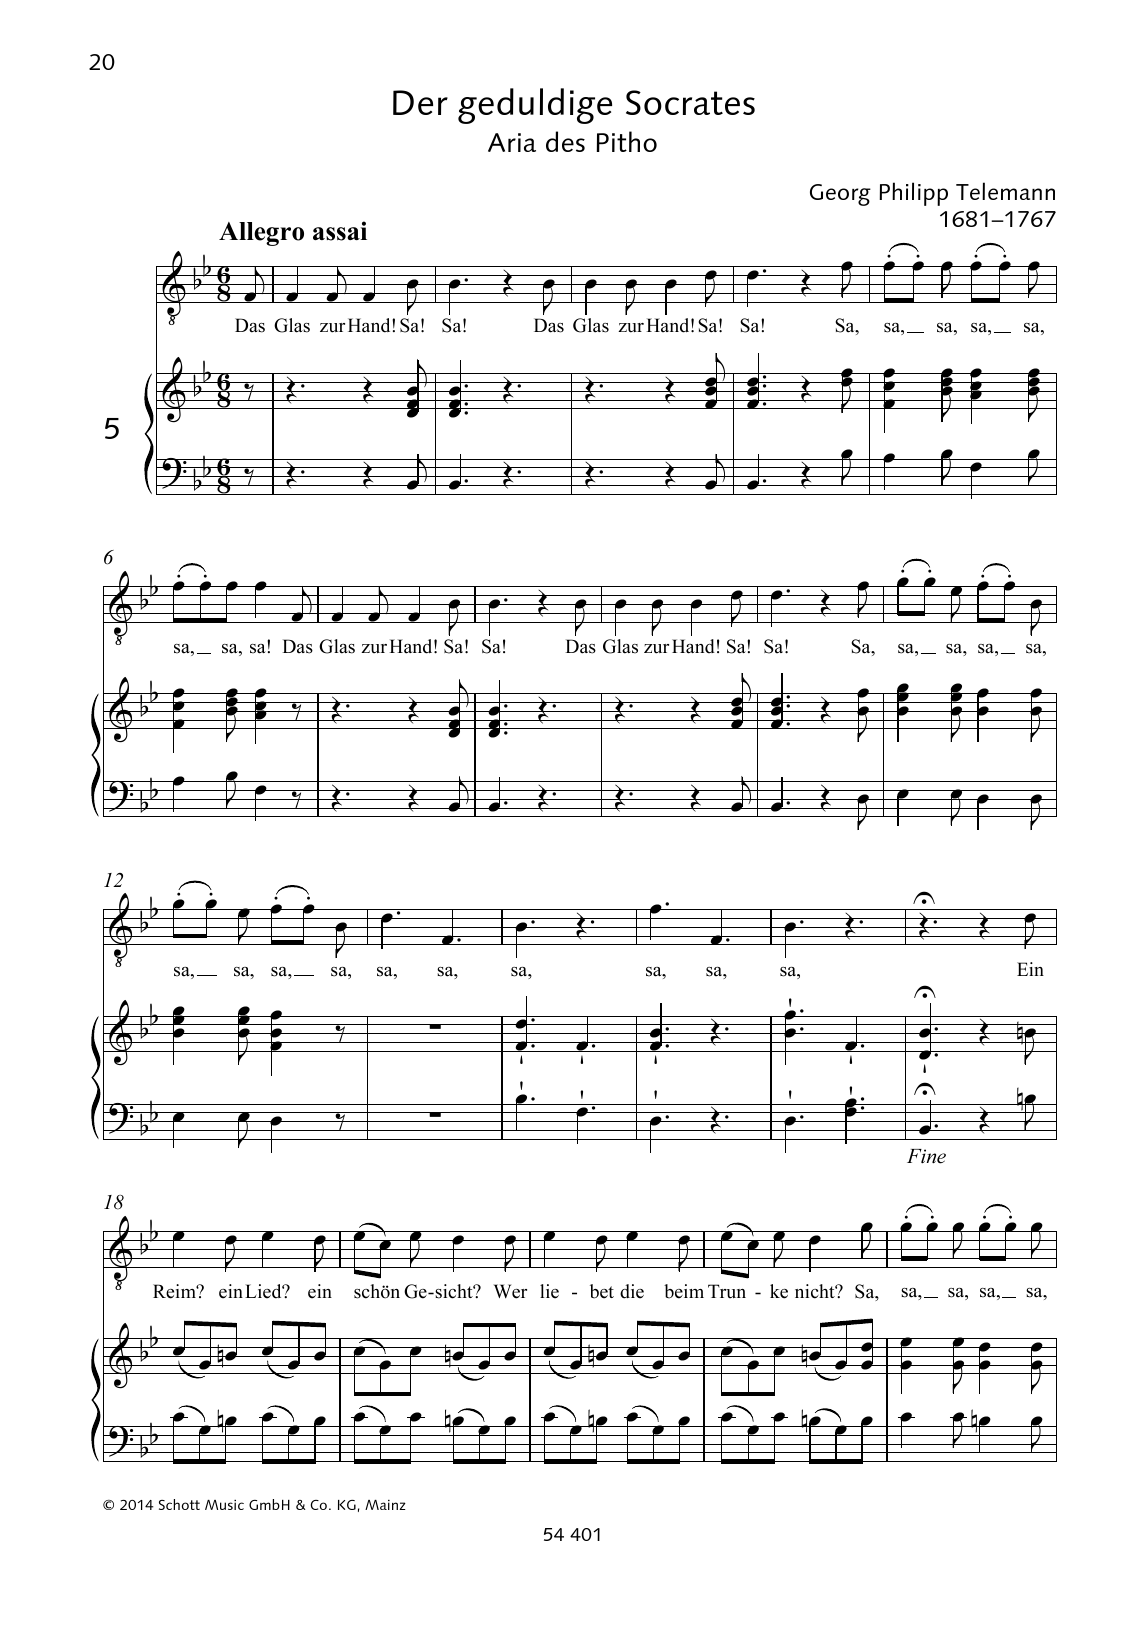 Georg Philipp Telemann Das Glas zur Hand Sheet Music Notes & Chords for Piano & Vocal - Download or Print PDF